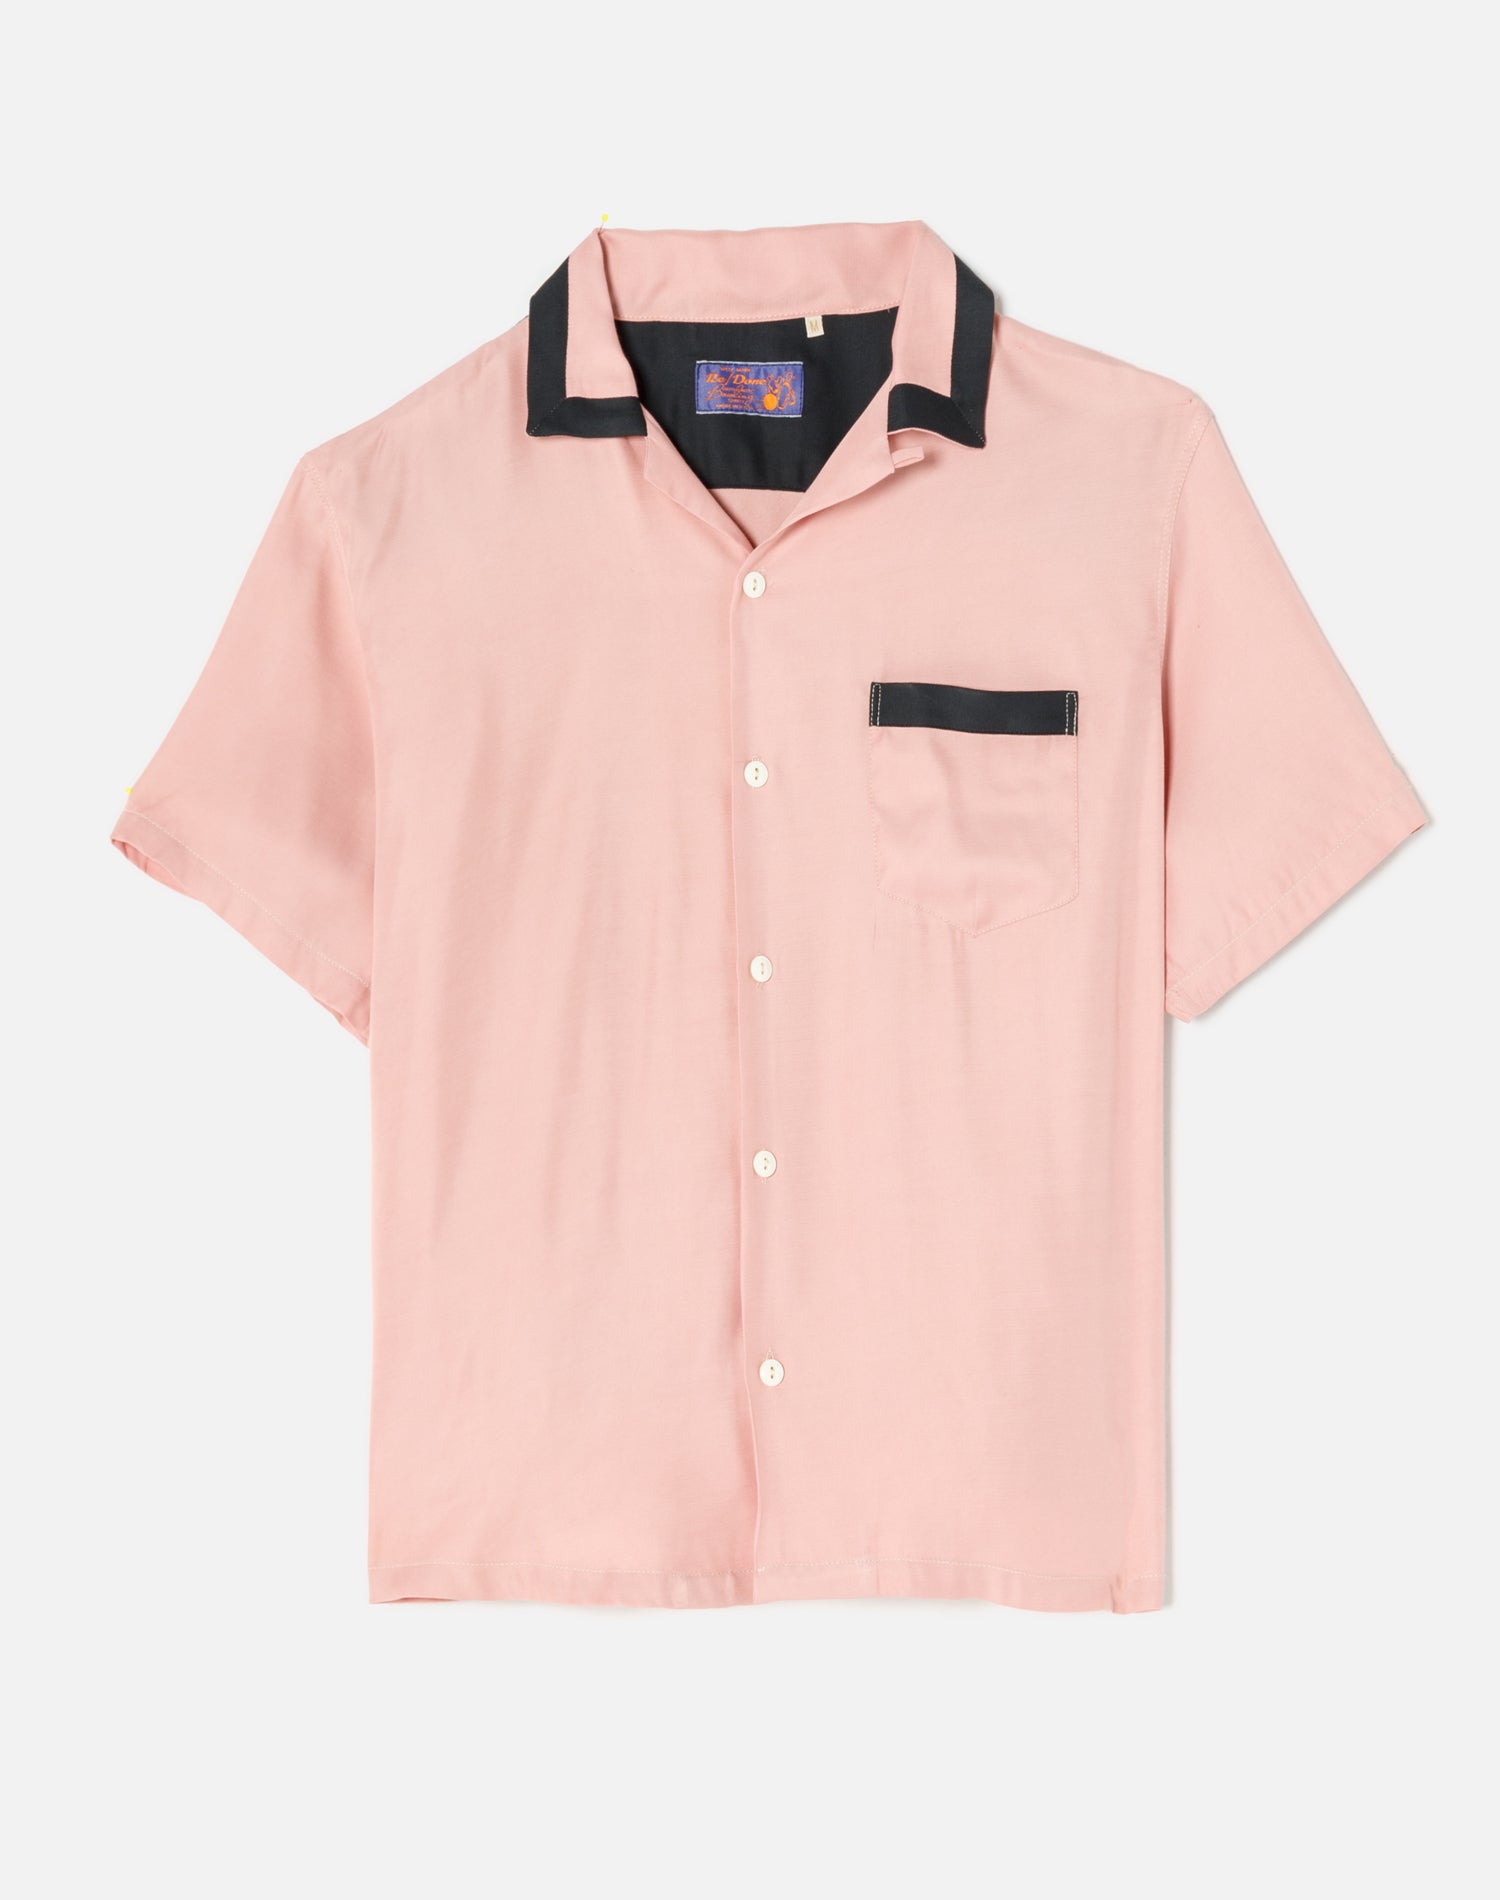 Striker Bowling Shirt - Pink/Black